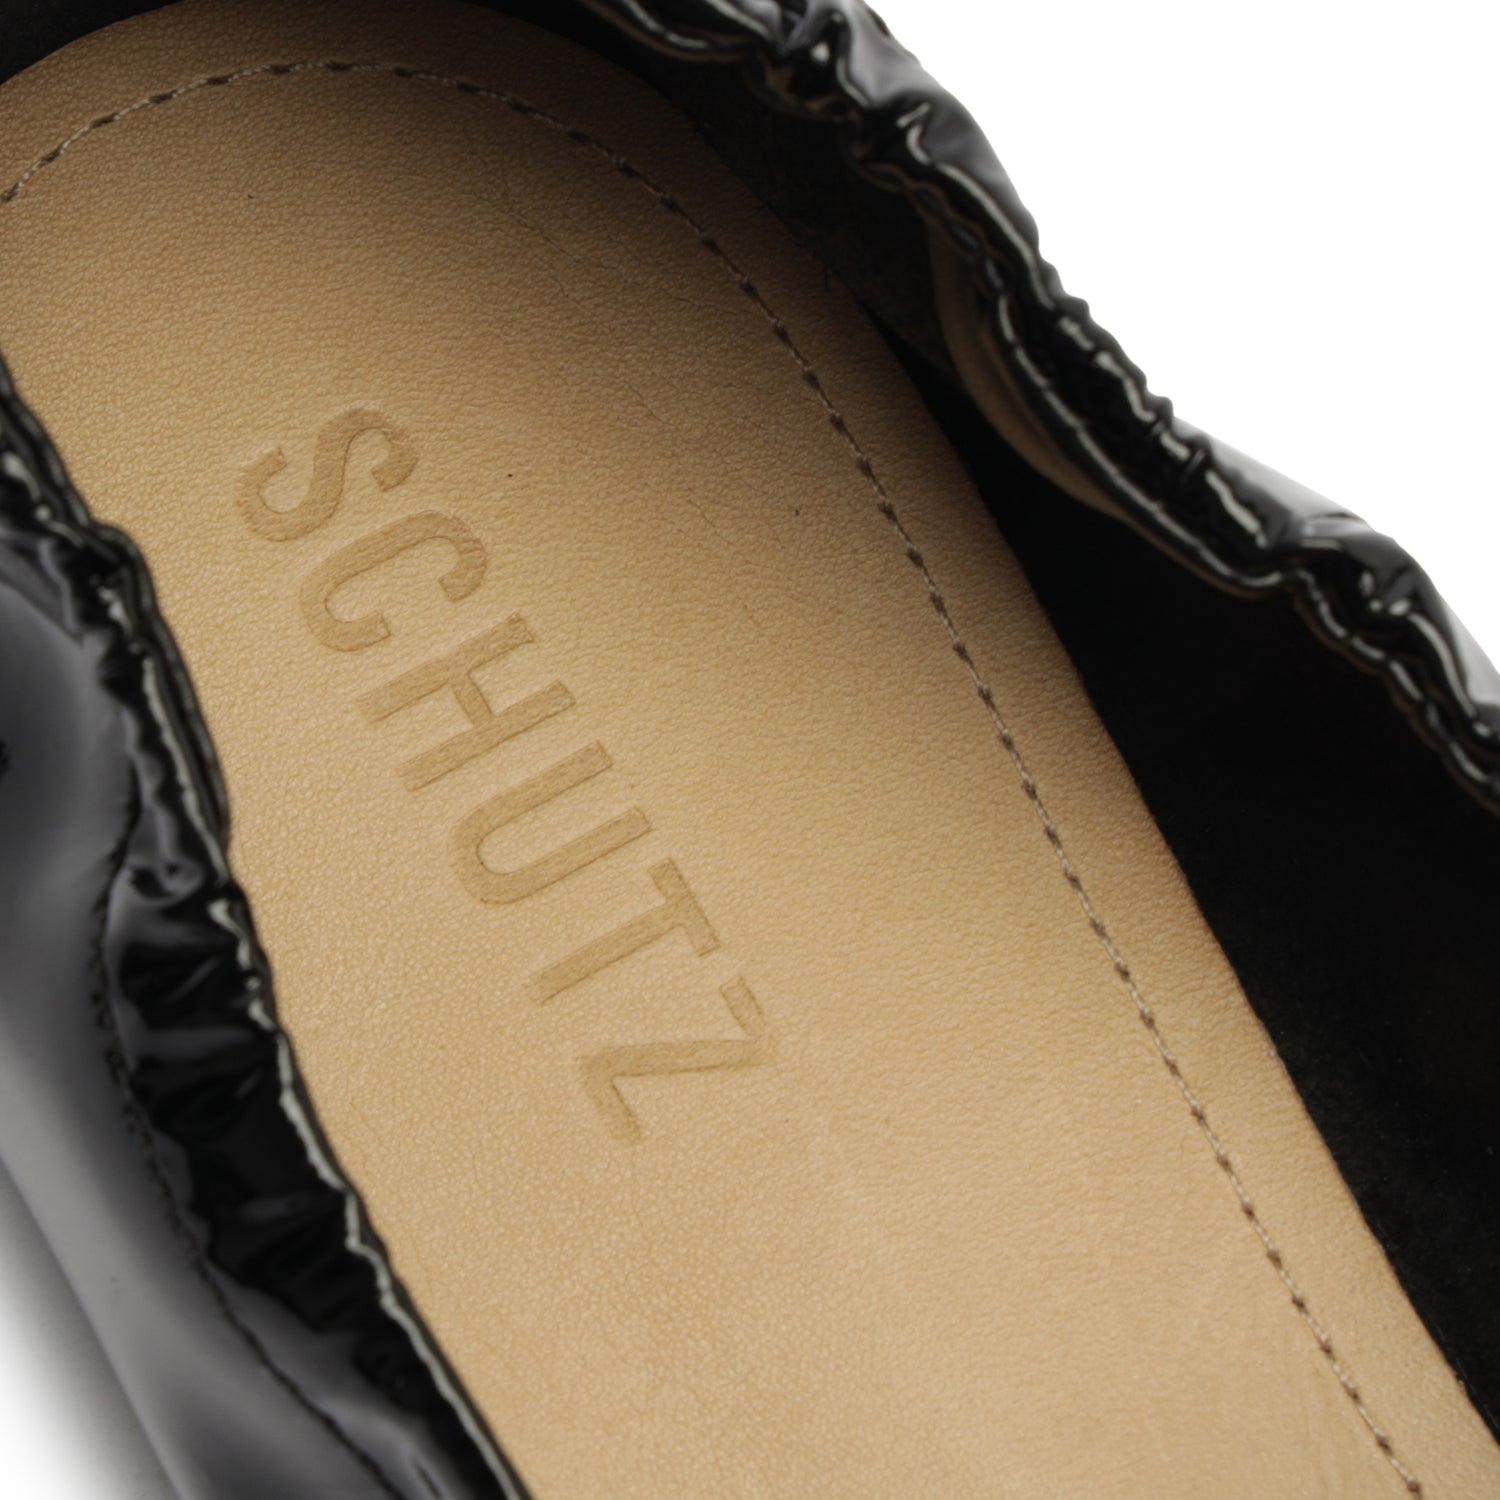 Calita Patent Leather Flat Flats RESORT 24    - Schutz Shoes